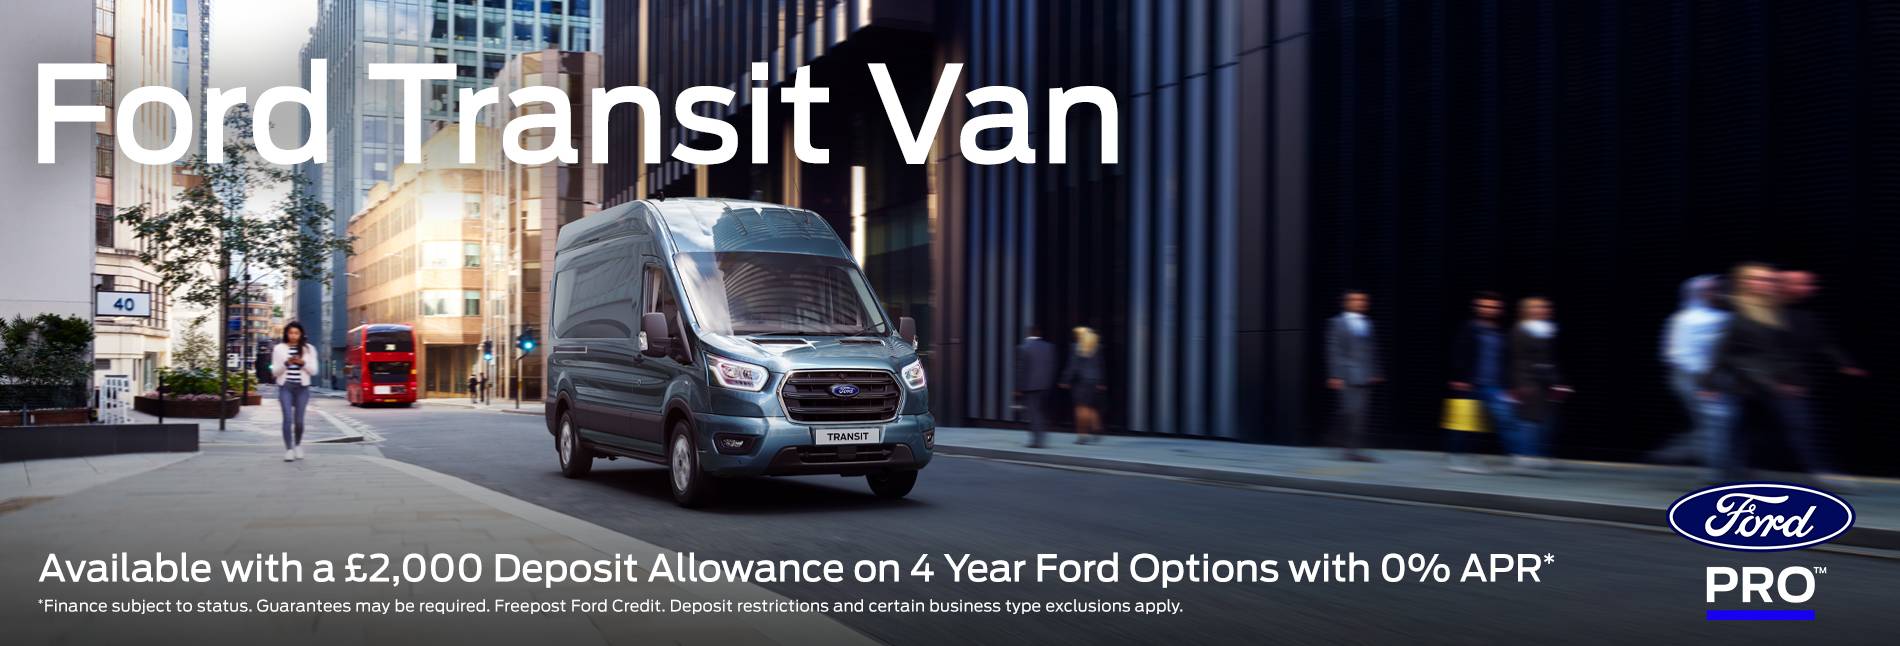 Ford Transit Van 0% APR offer